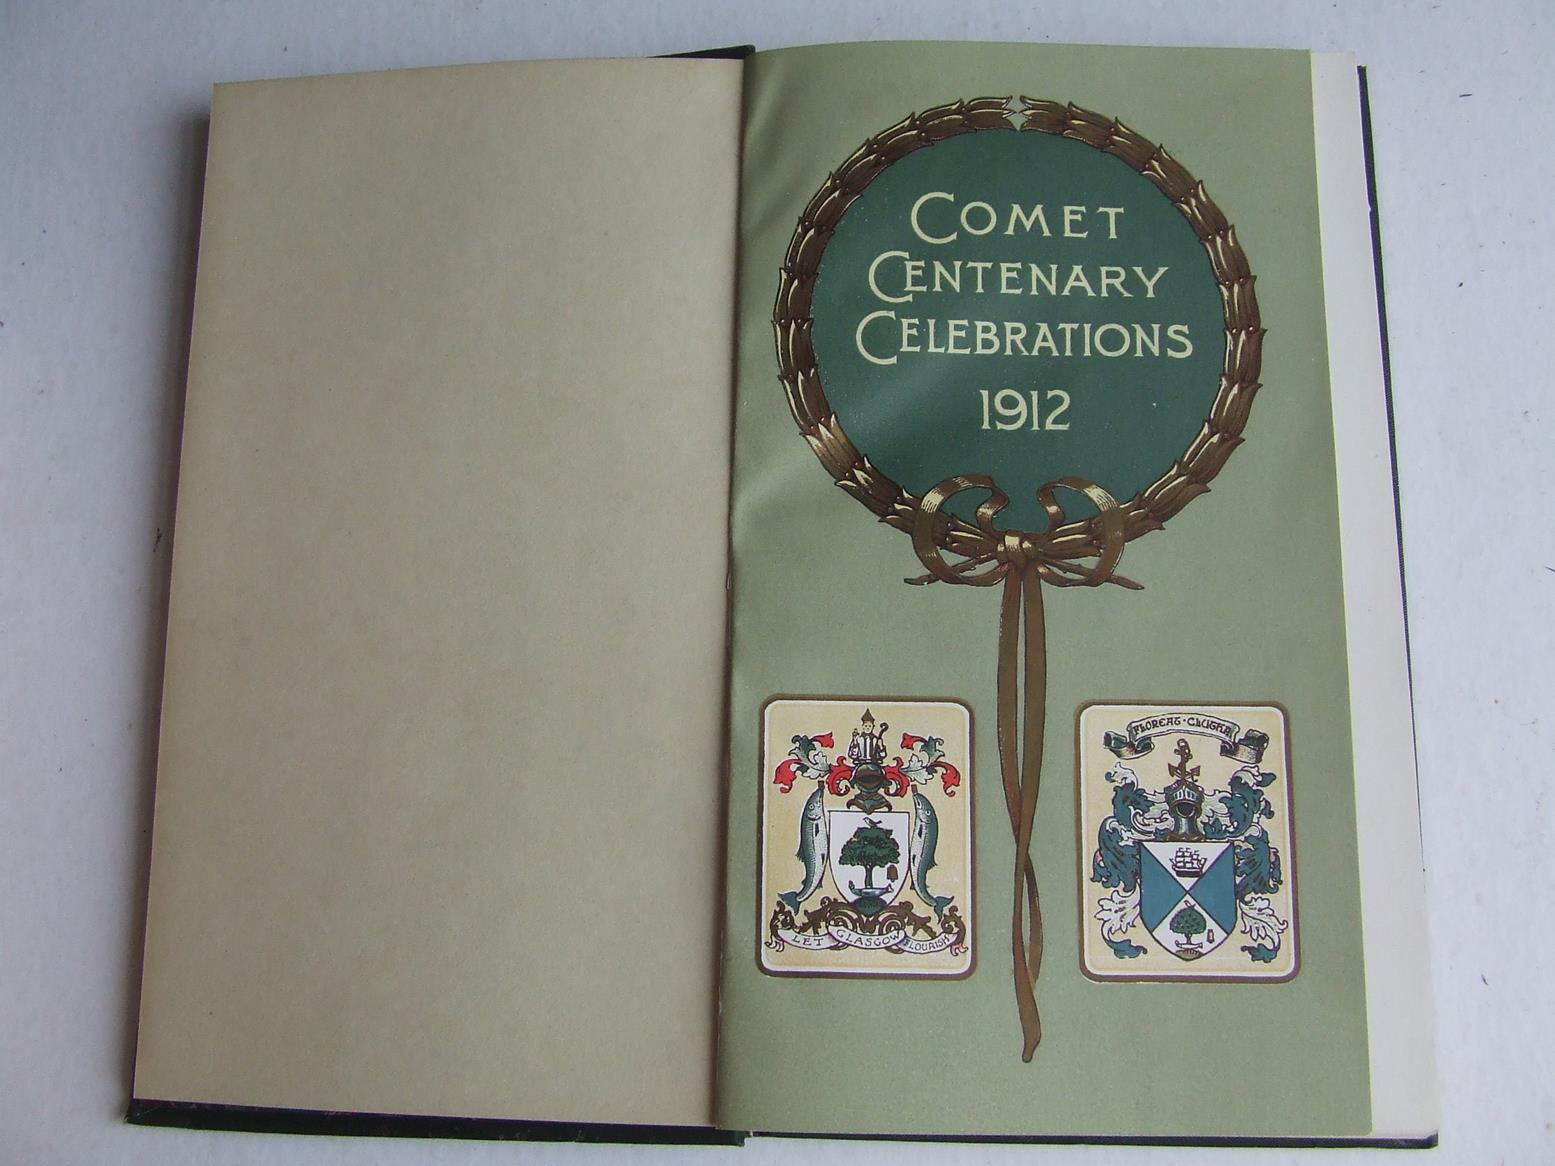 Celebration of Centenary of Launch of Steamer "Comet", built for Henry Bell